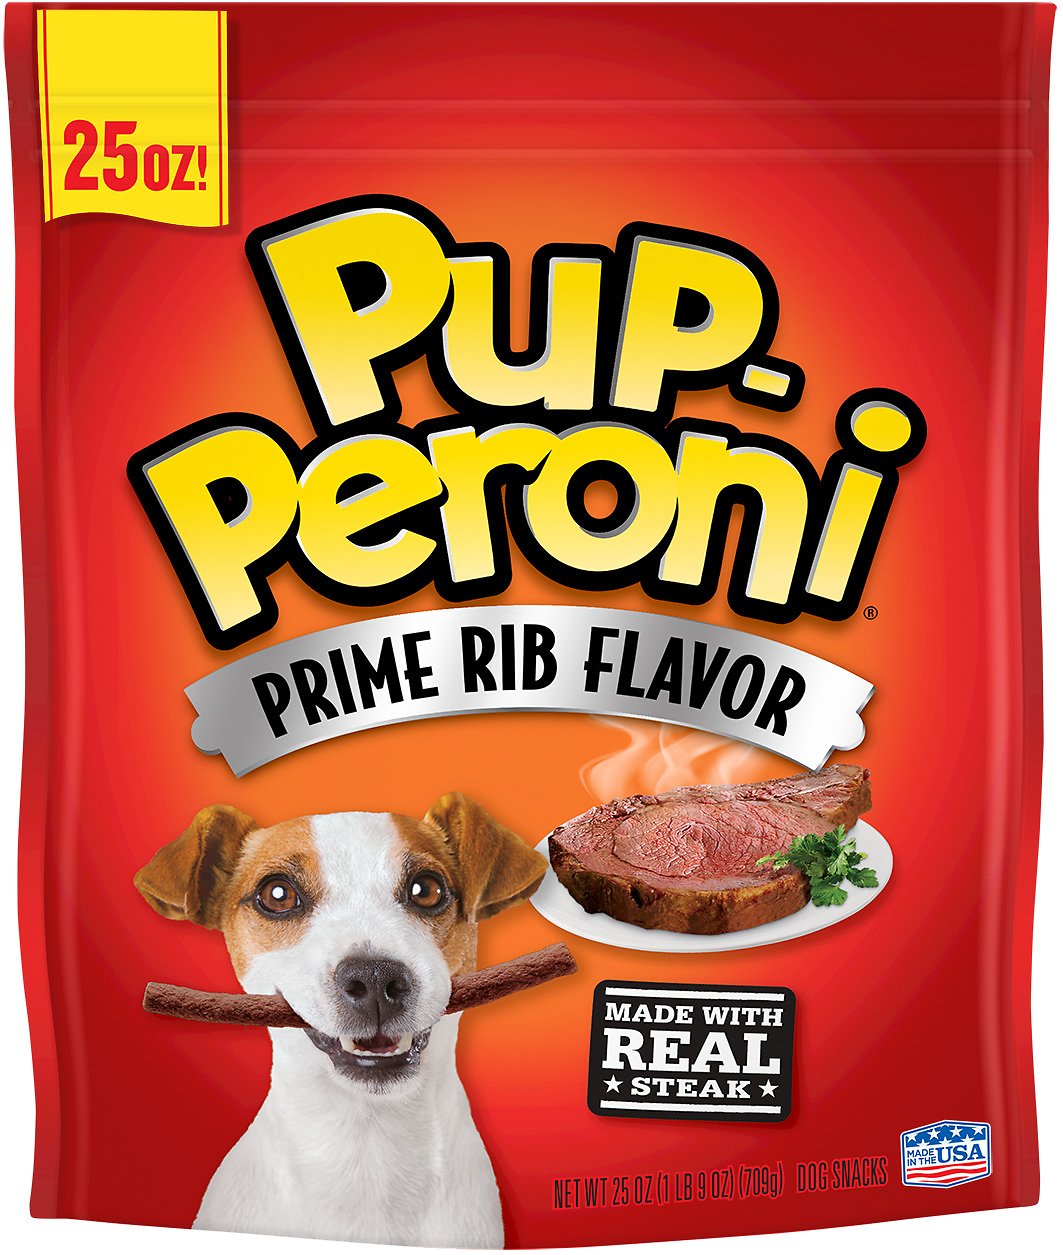 Pup Prime Rib.jpg